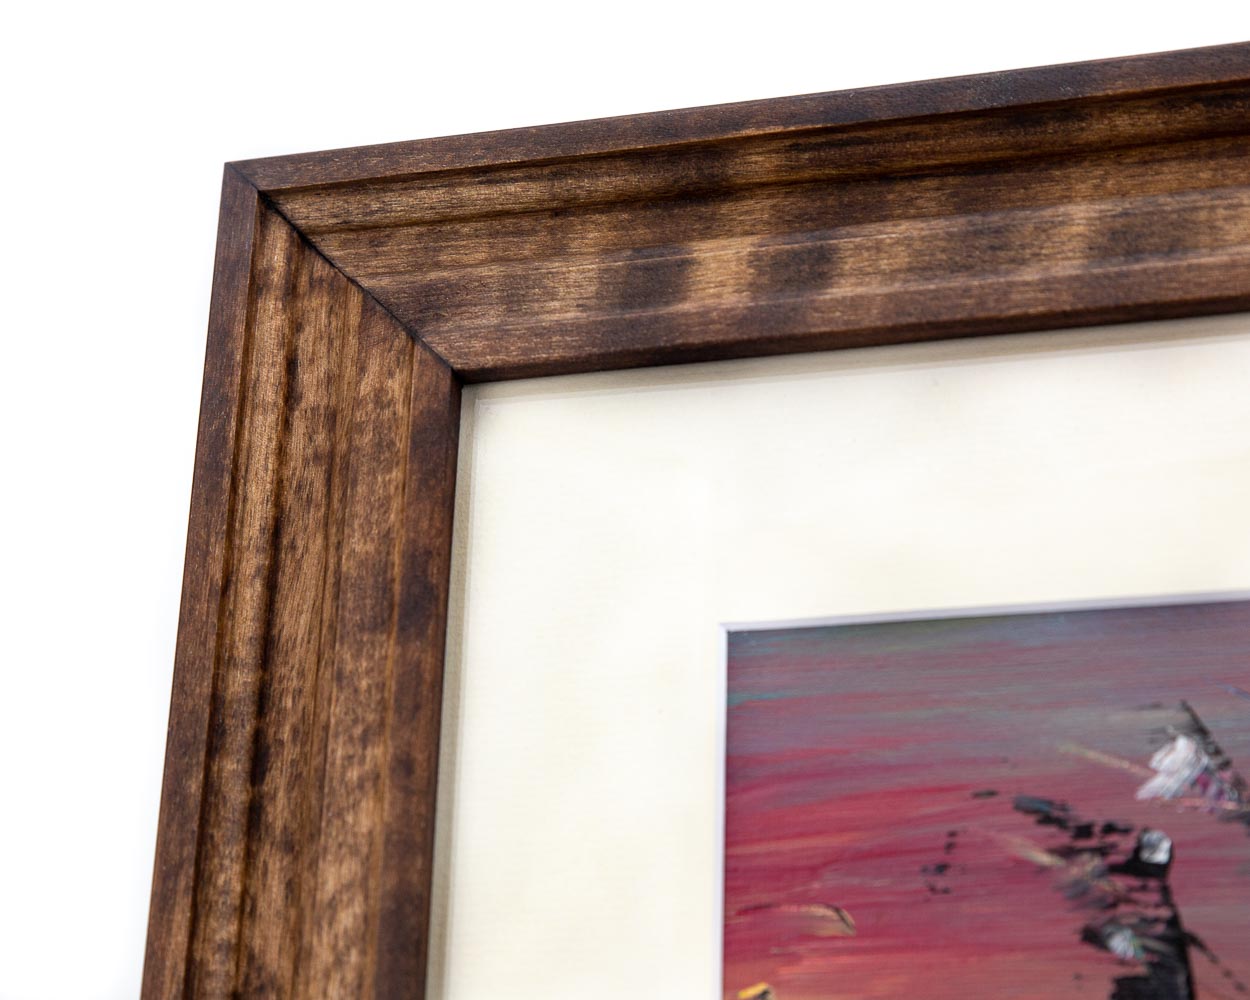 Walnut Brown Vintage Design Photo Frame from Solid Birch Hardwood 2 inch wide